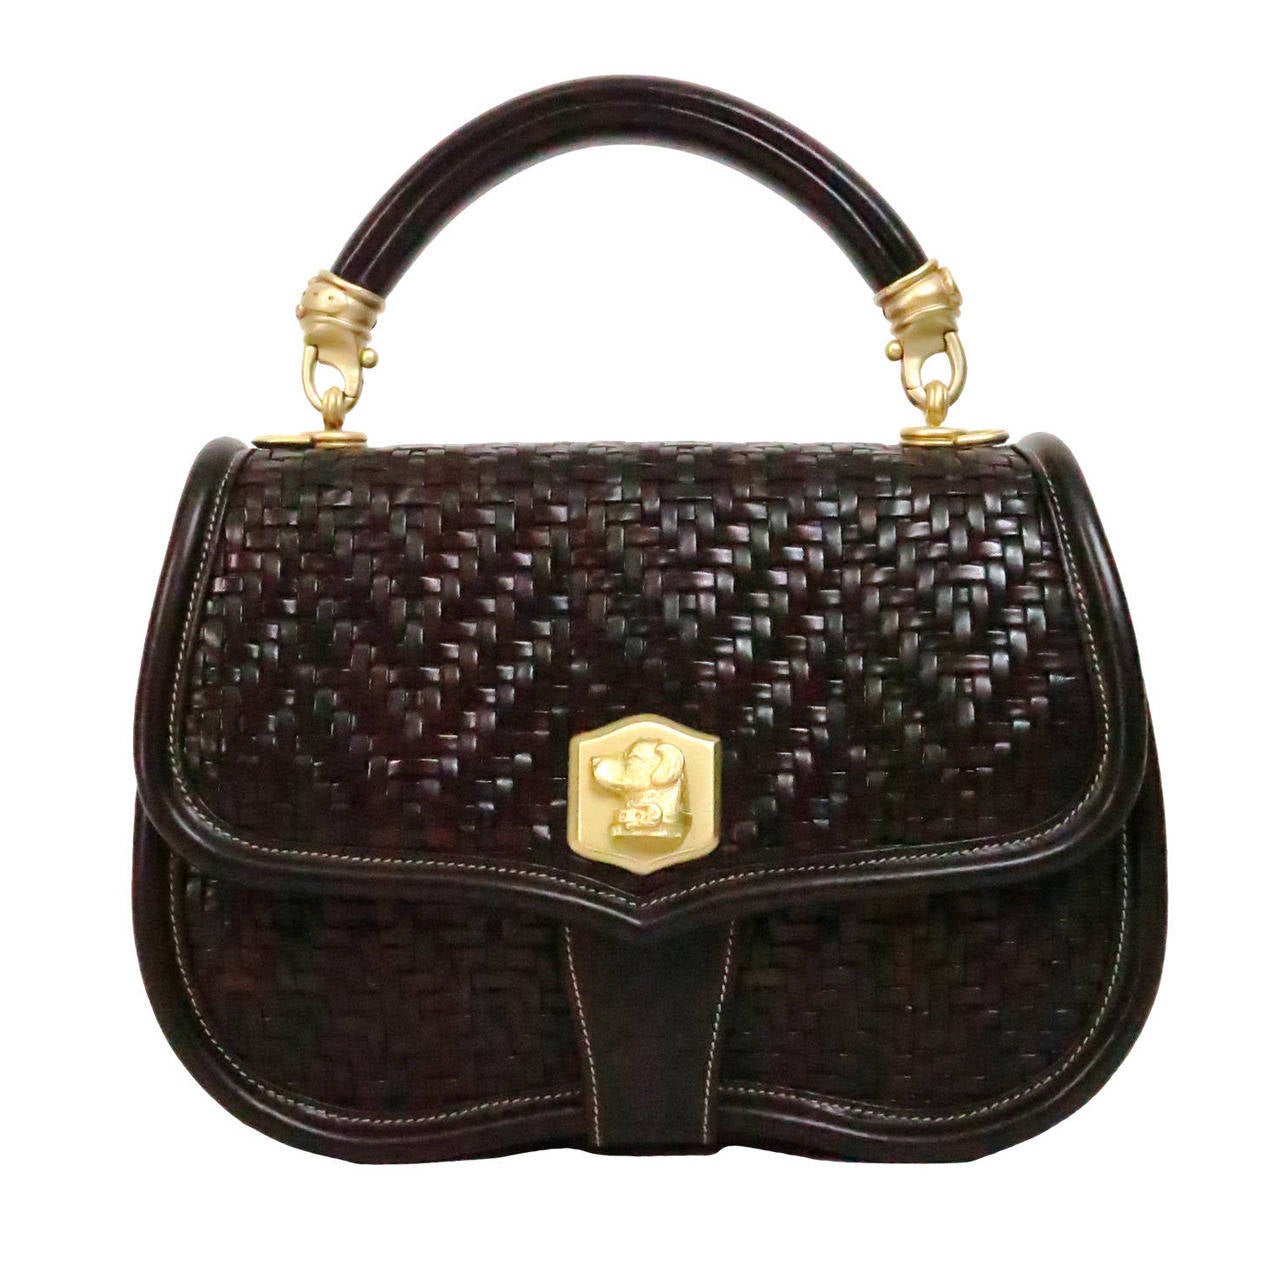 1991 Barry Kieselstein Cord rich chocolate brown woven leather handbag ...